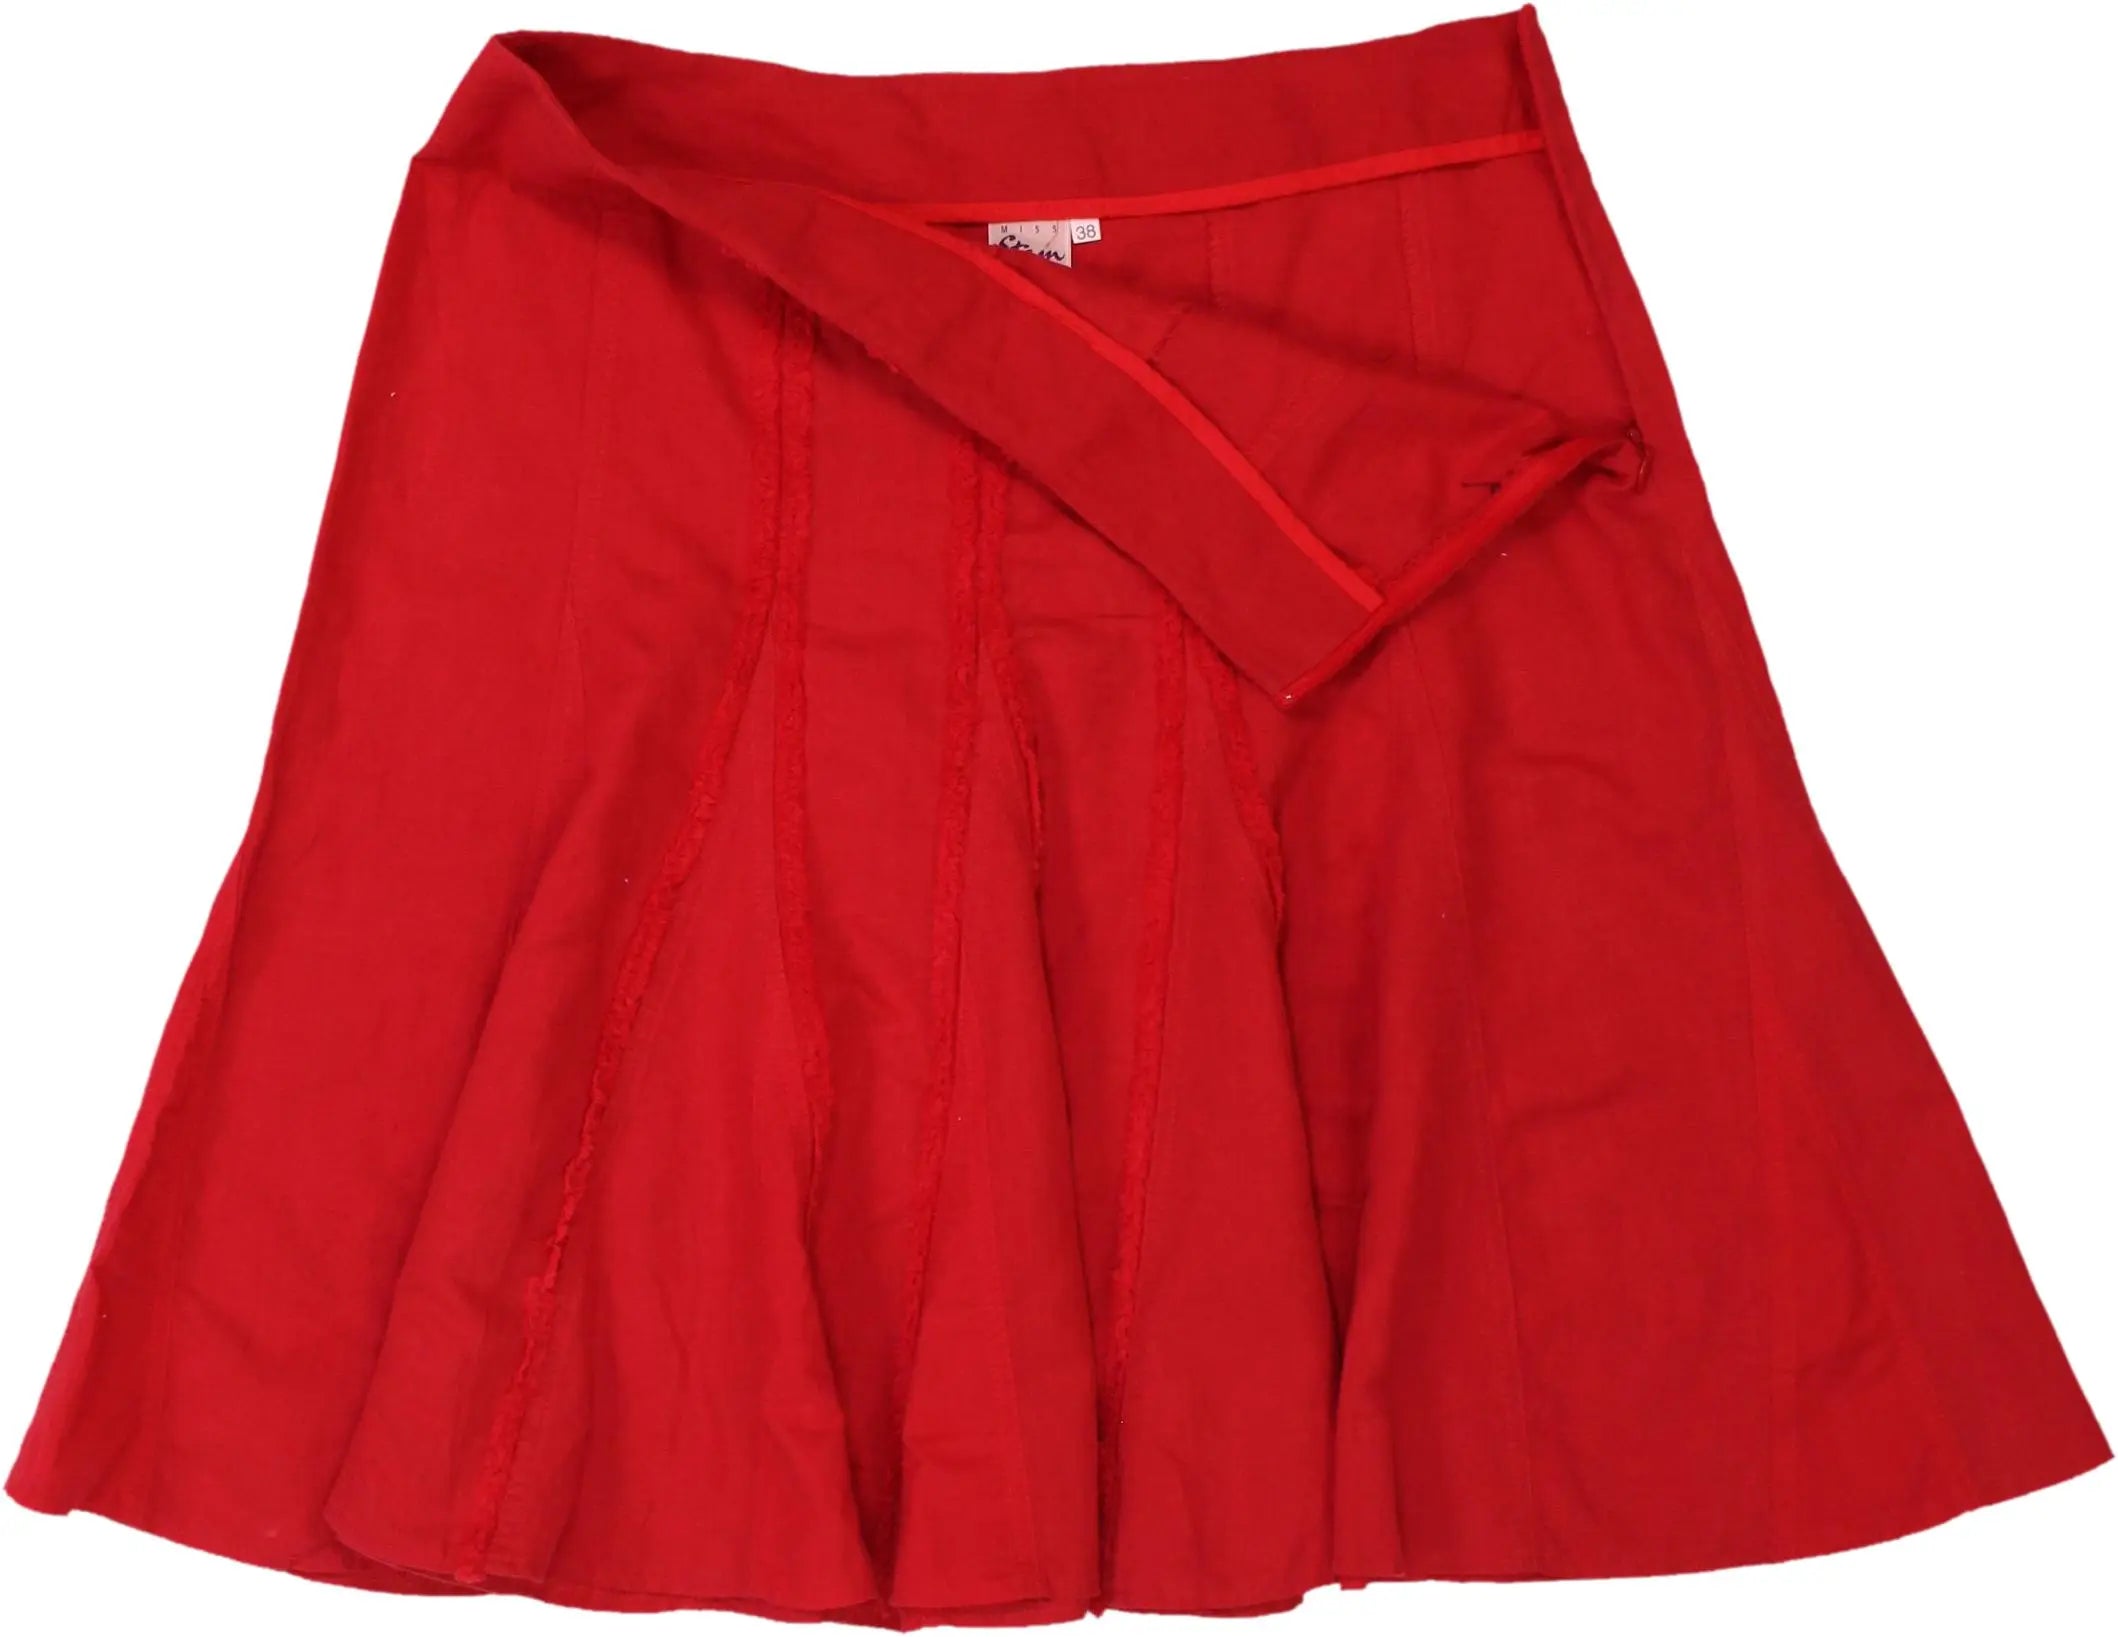 Miss Etam - Linen Blend Skirt- ThriftTale.com - Vintage and second handclothing